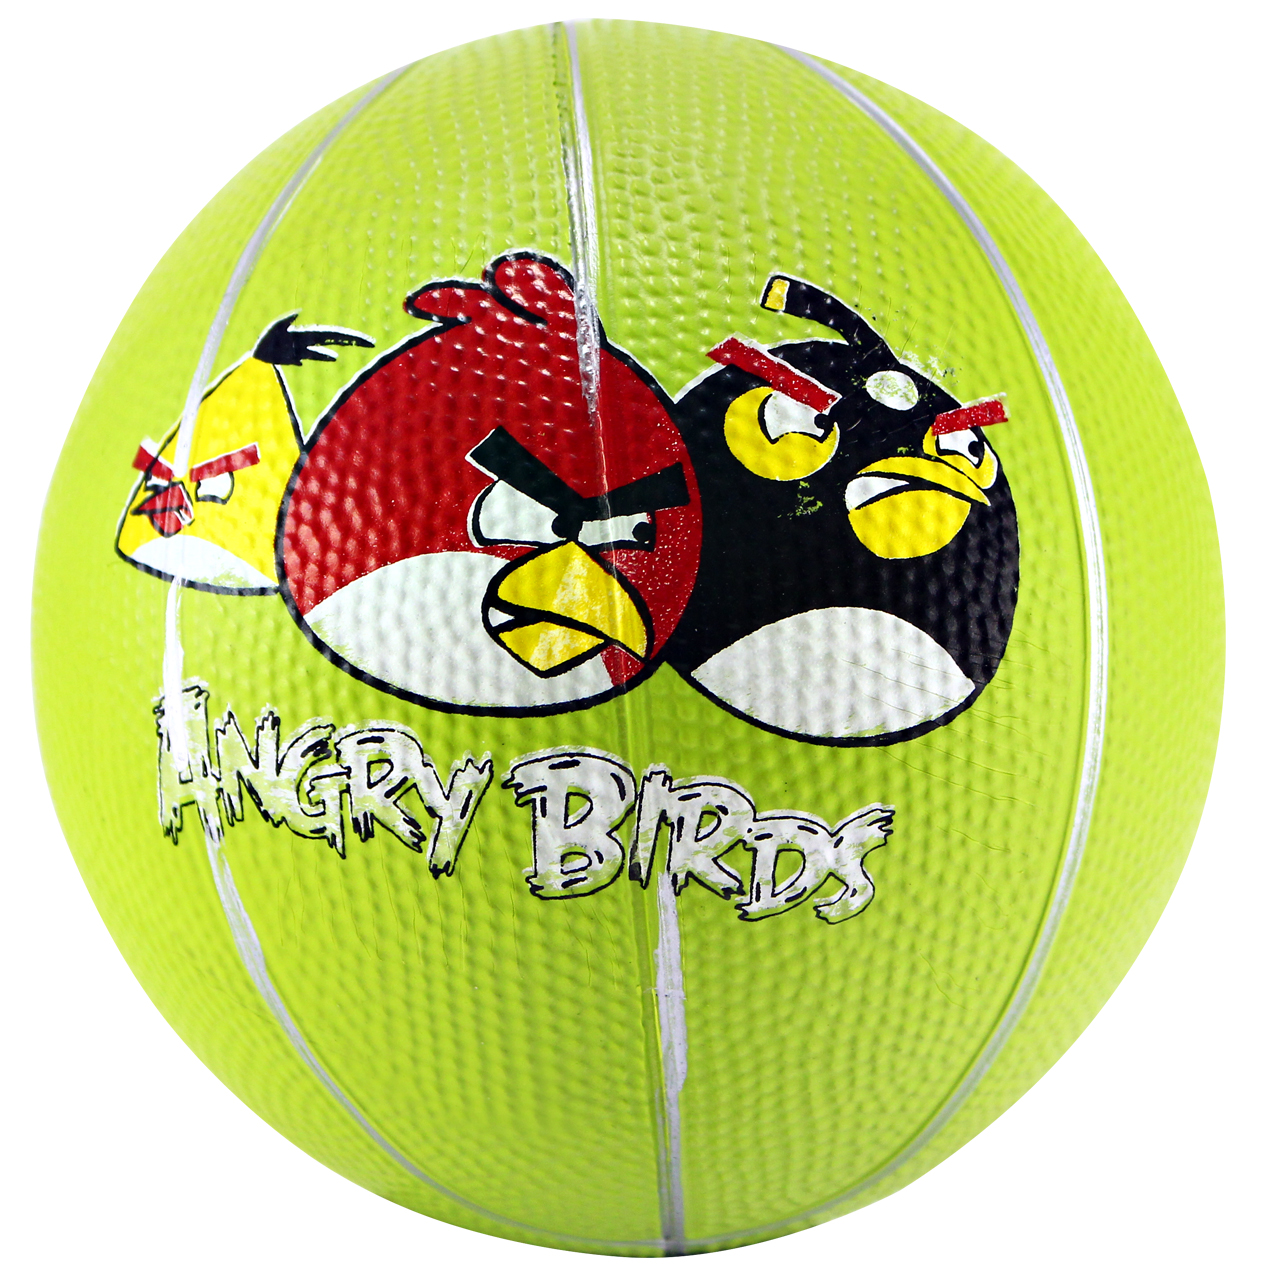 مینی توپ بسکتبال مدل Angry Bird کد 14070015 سایز 3